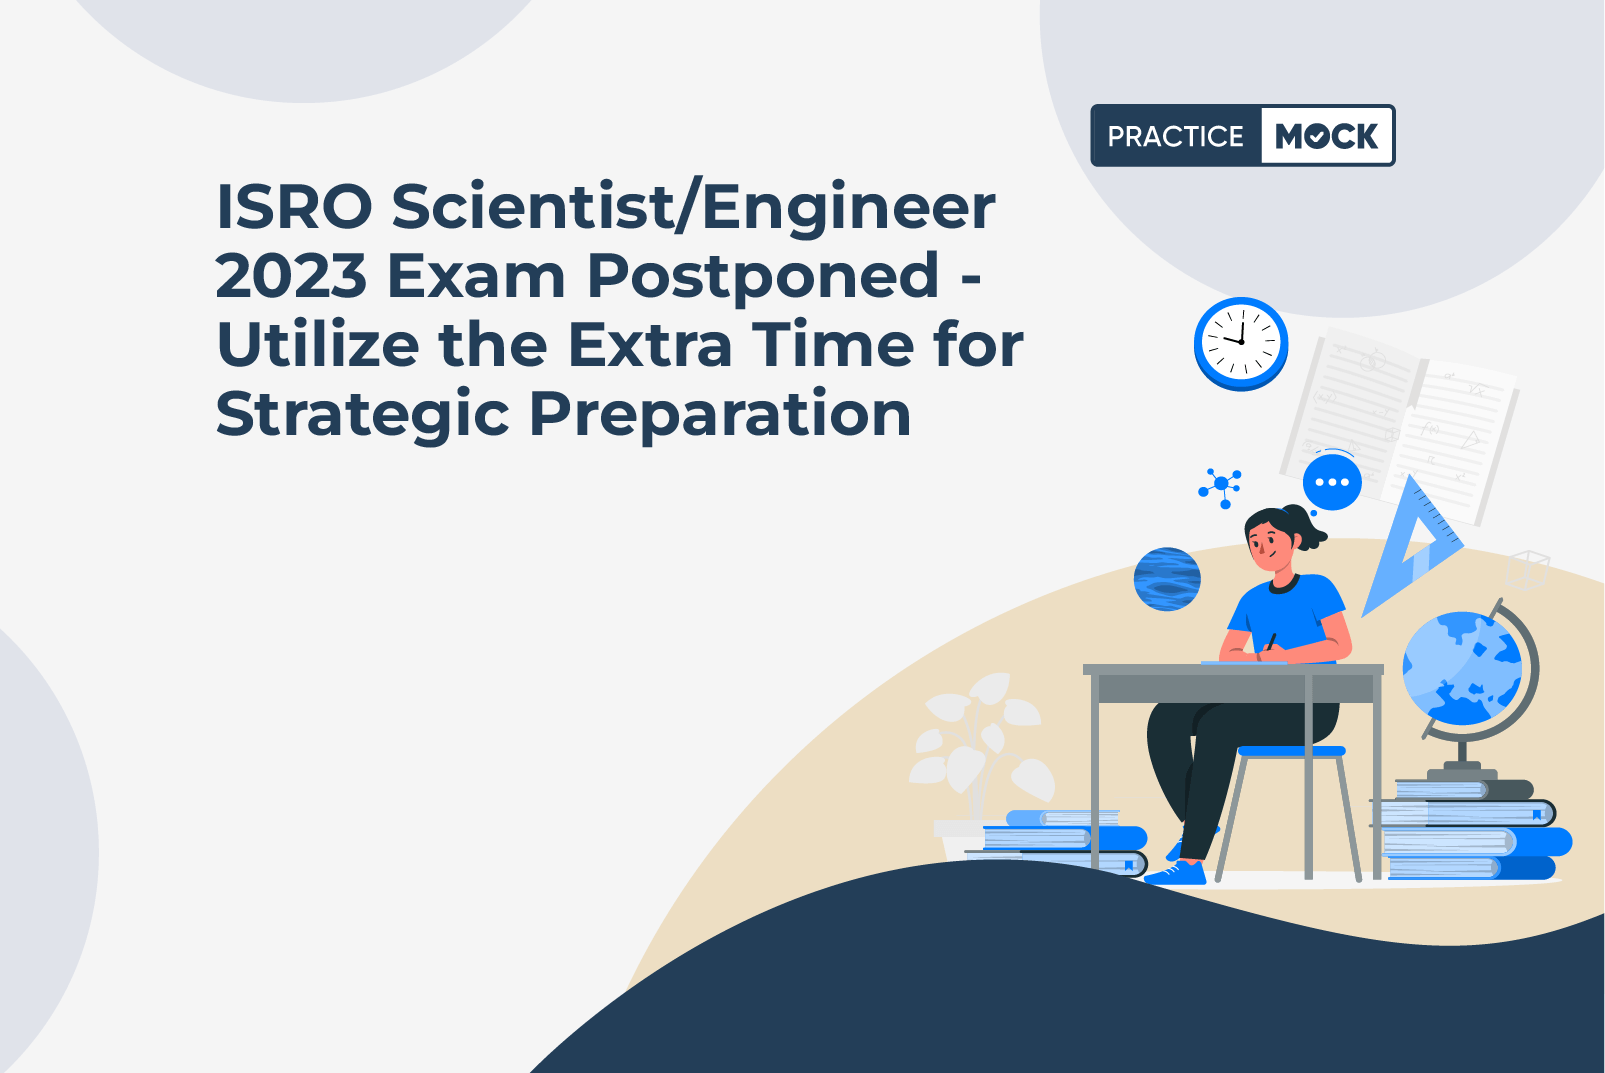 ISRO Scientist/Engineer 2023 Exam Postponed – Utilize this 6-Day Challenge for Strategic Preparation